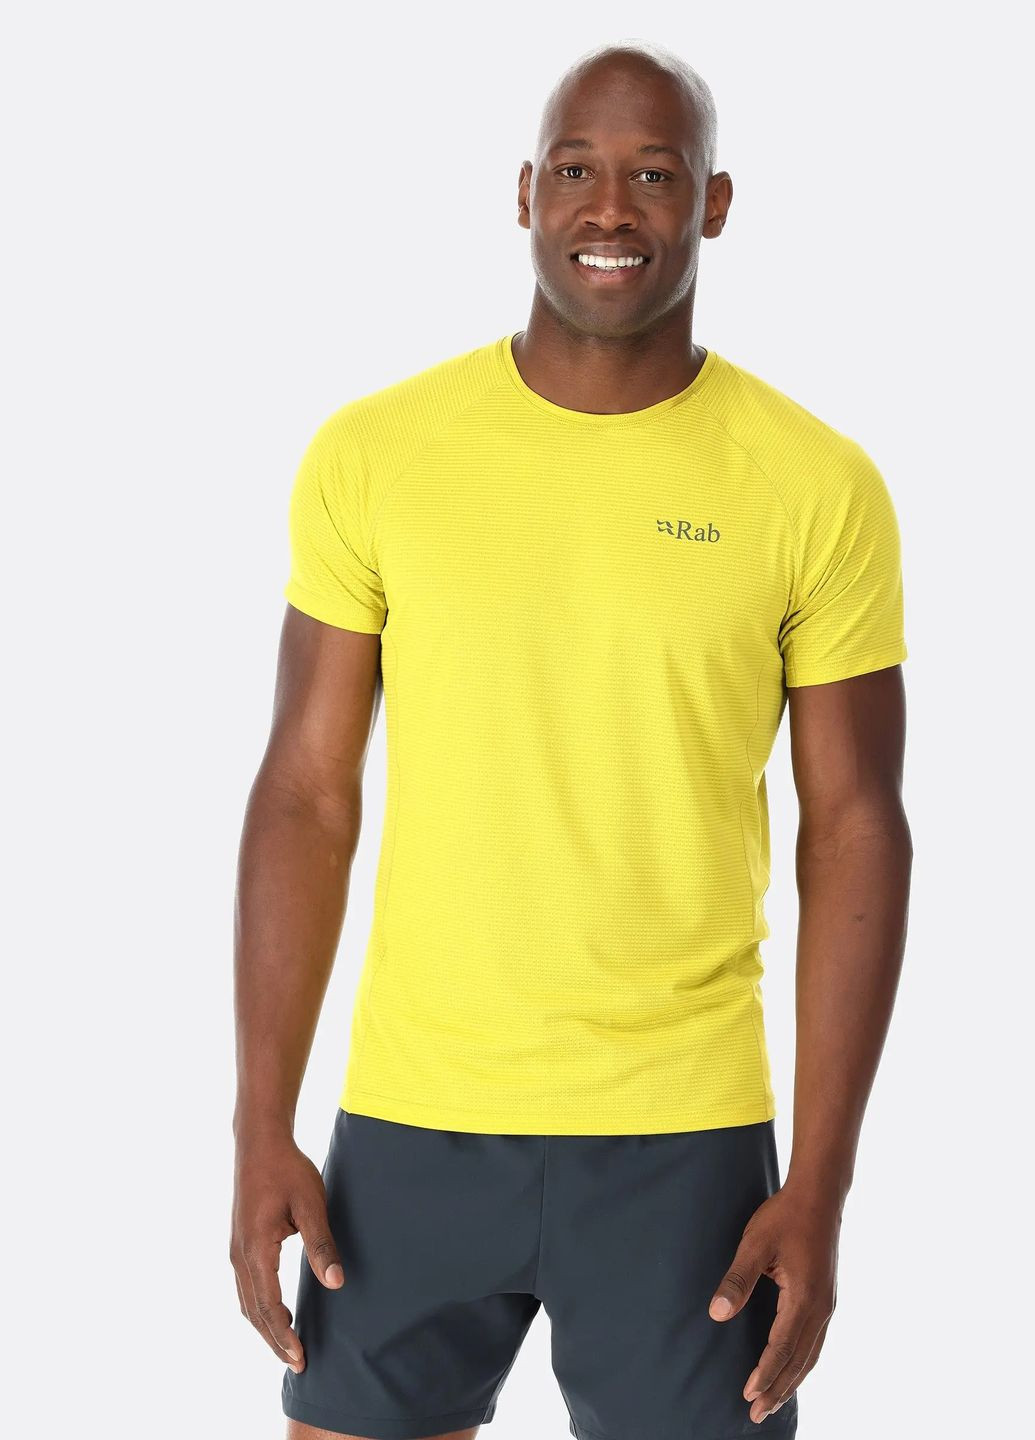 Желтая футболка onic tee s Rab